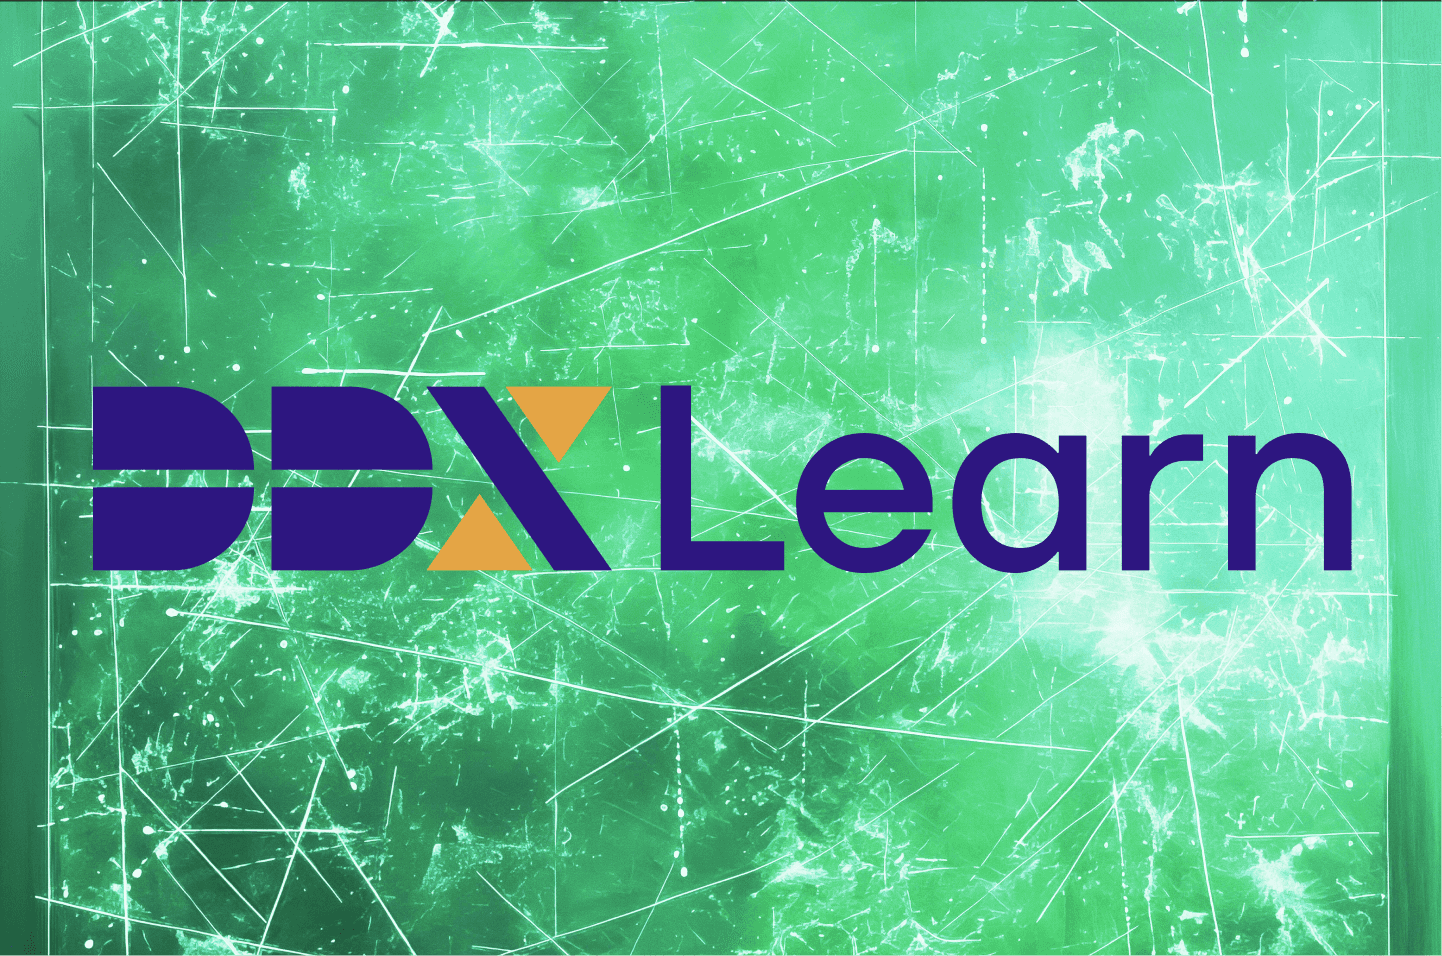 green texture behind derivadex learn logo